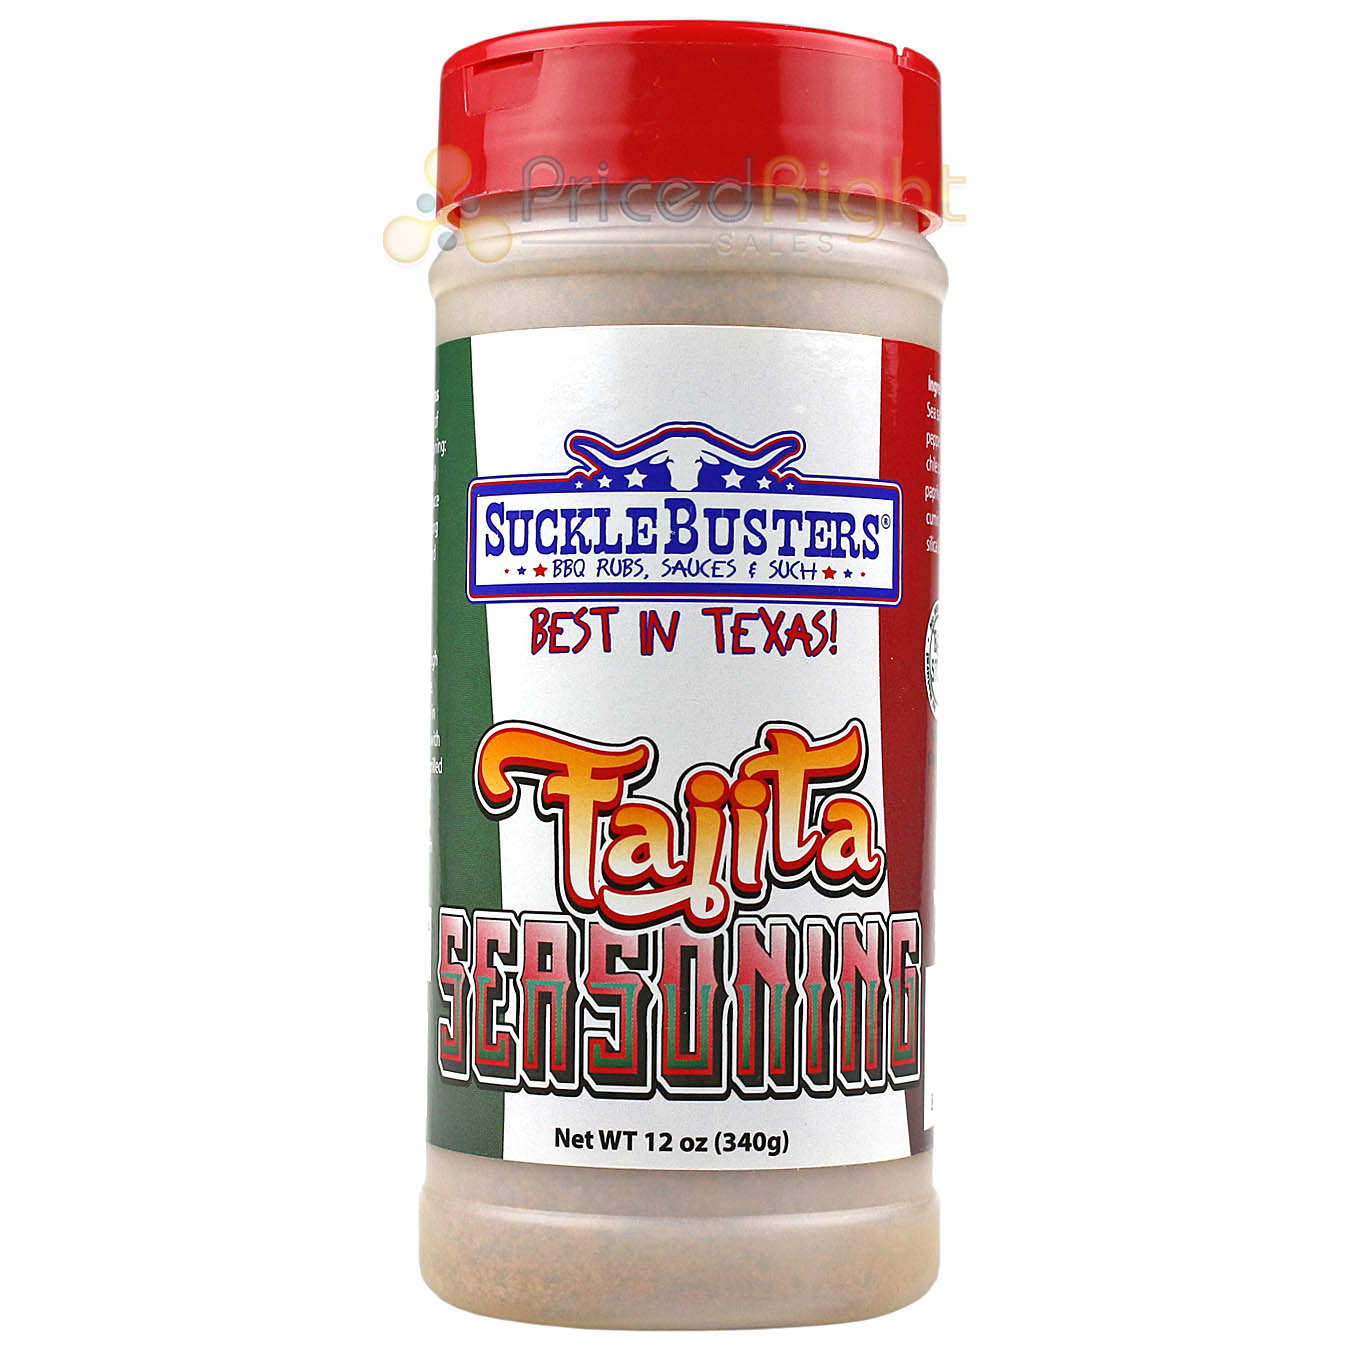 Sucklebusters Fajita Seasoning 12 oz. Spicy Hot Traditional Tex Mex Style No Msg